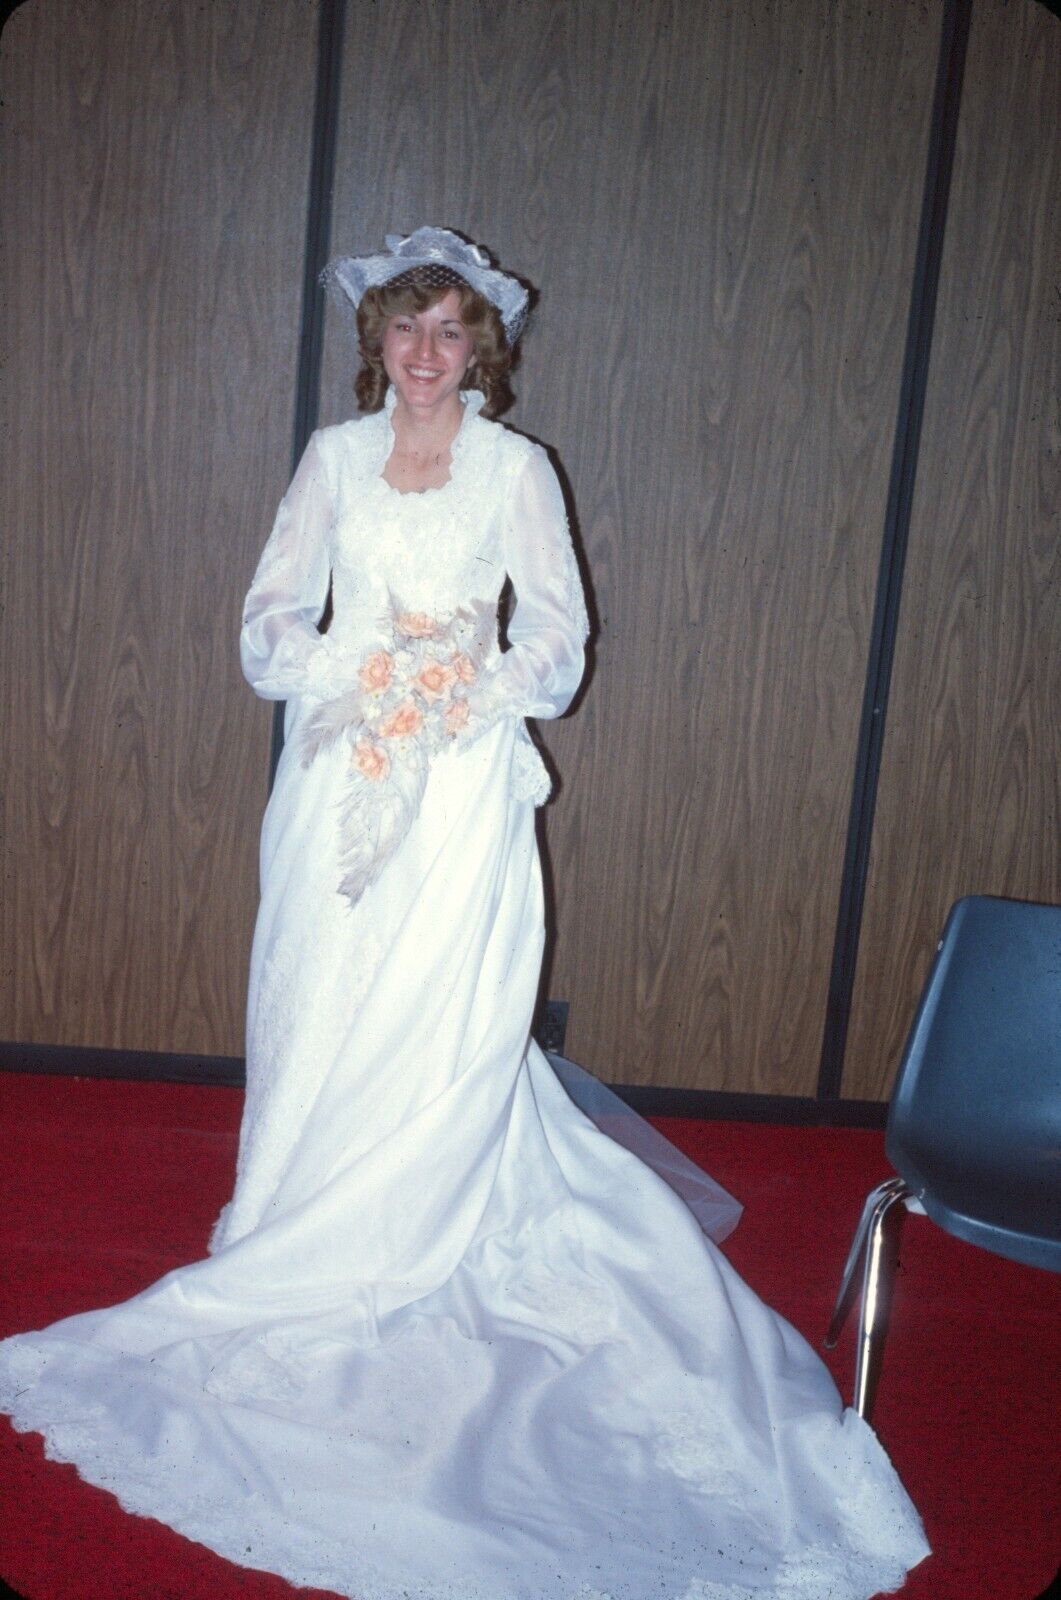 1979 Young Happy Bride Wearing Wedding Dress Holding Flowers Vintage 35mm Slide